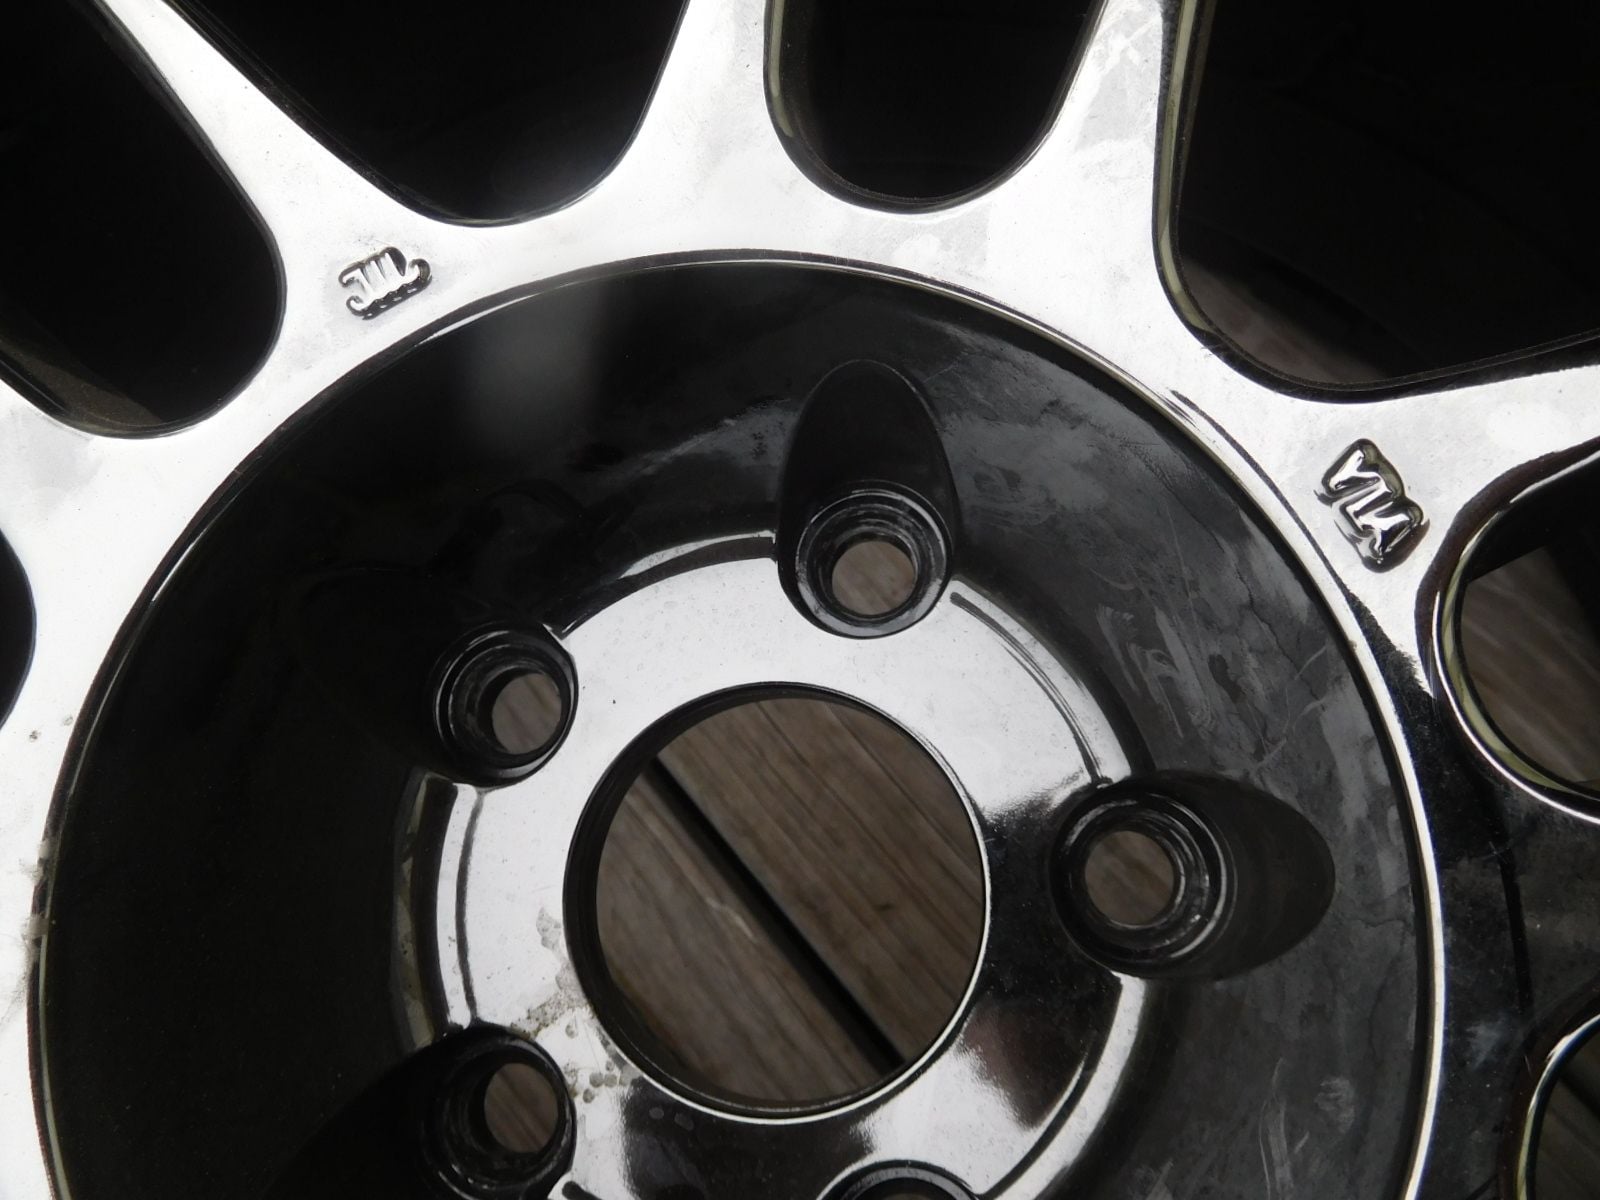 Wheels and Tires/Axles - Enkei RPF1 Wheels SBC, 18x10.5 + 15 - New - All Years Any Make All Models - Bryan, TX 77803, United States